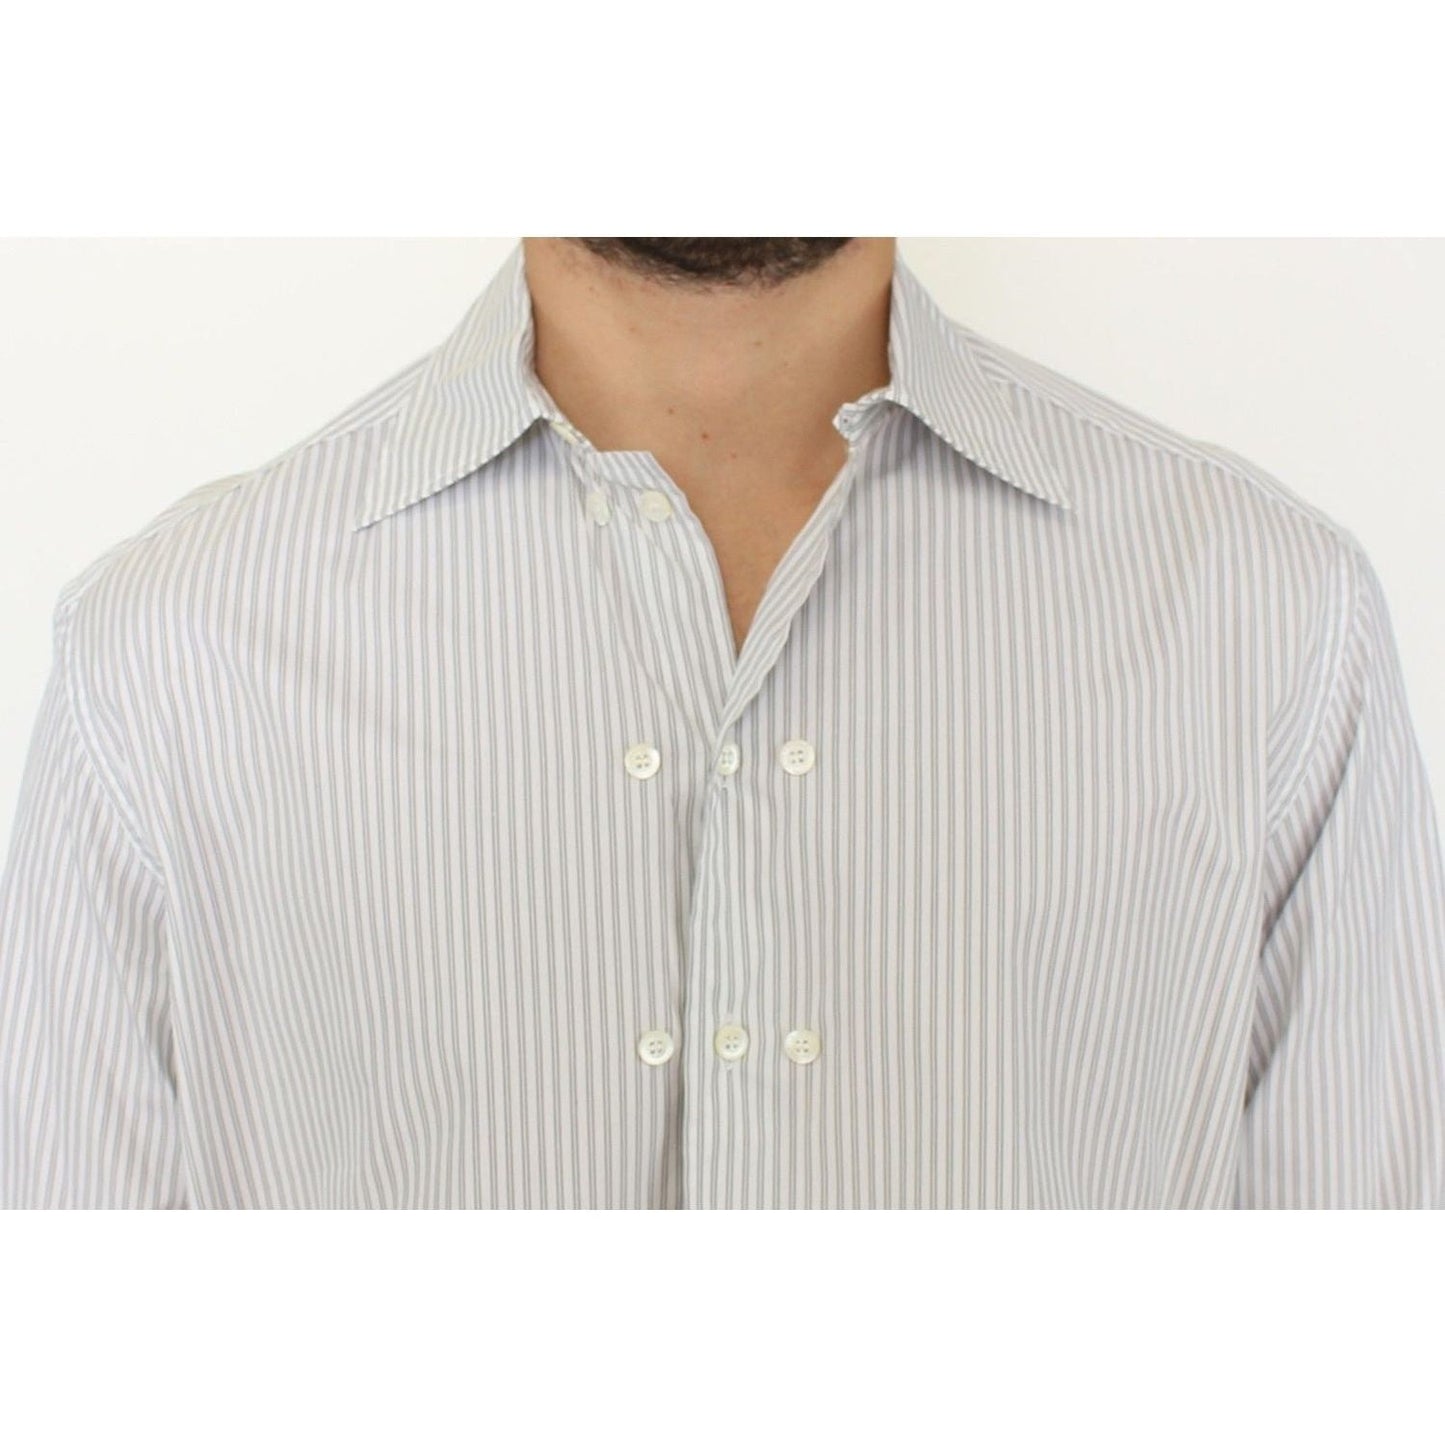 Ermanno ScervinoElegant White and Gray Striped Cotton ShirtMcRichard Designer Brands£179.00